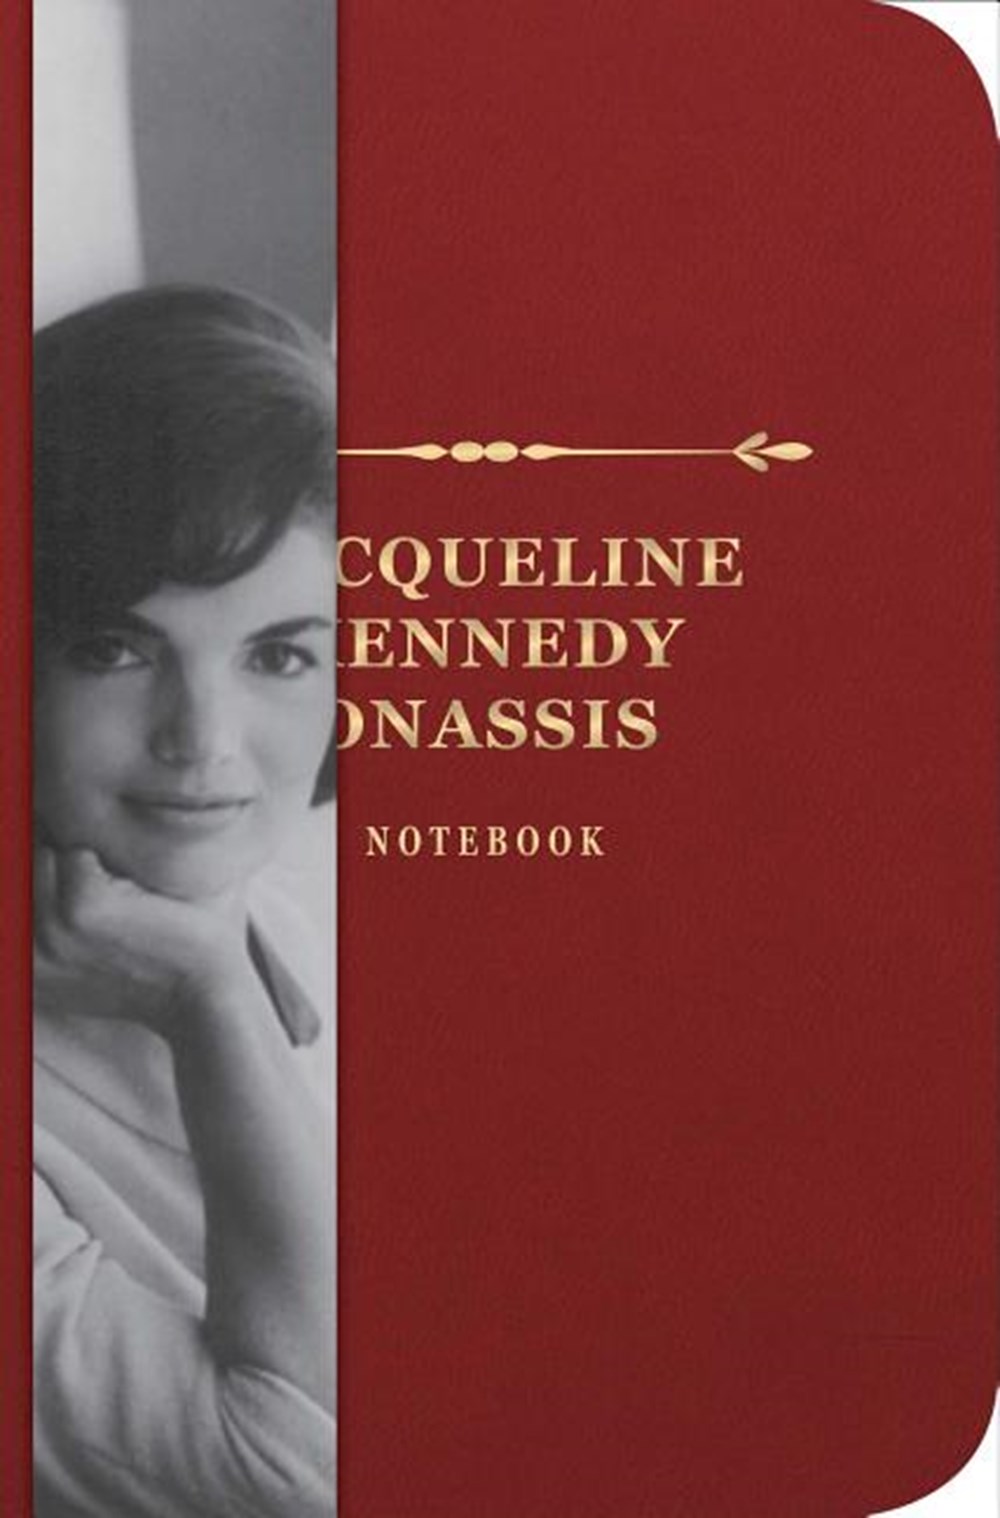 Jackie Kennedy Signature Notebook: An Inspiring Notebook for Curious Minds 13